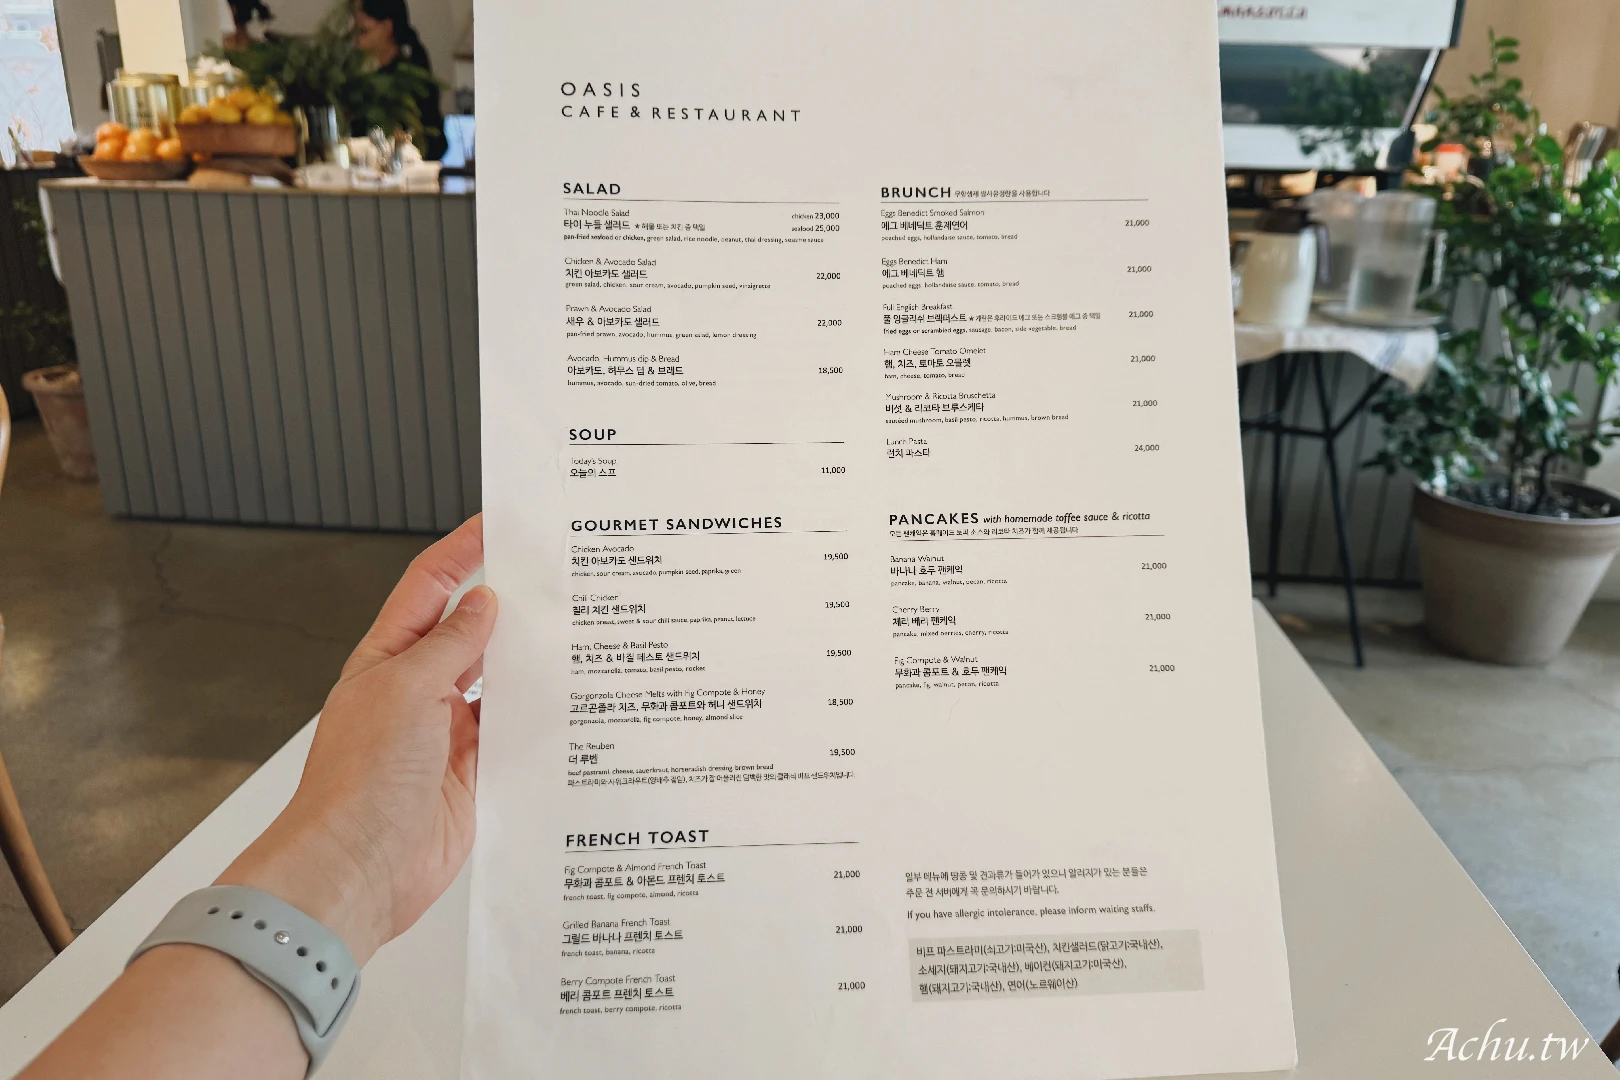 Oasis Cafe & Restaurant menu